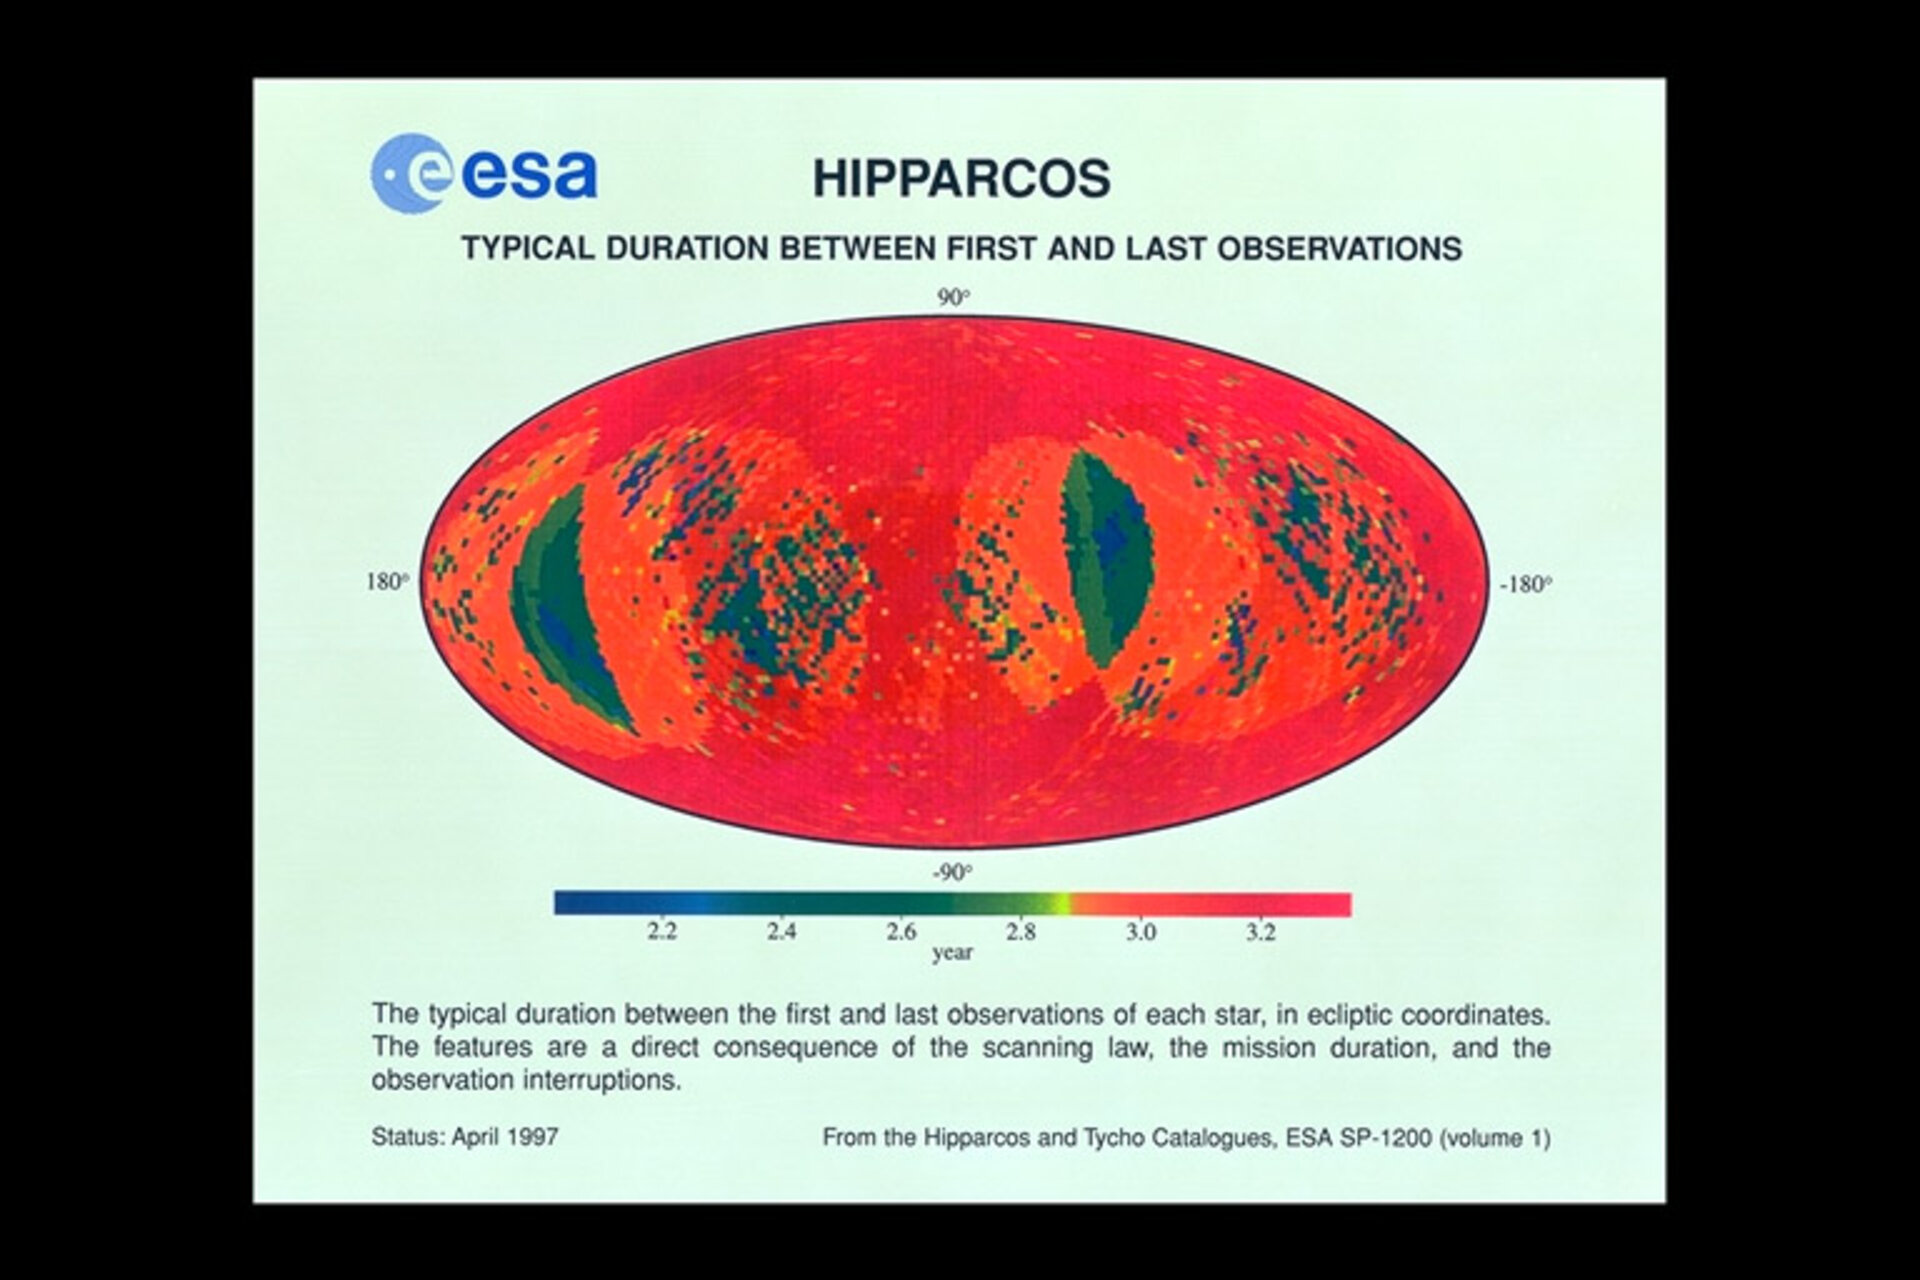 Hipparcos observation intervals